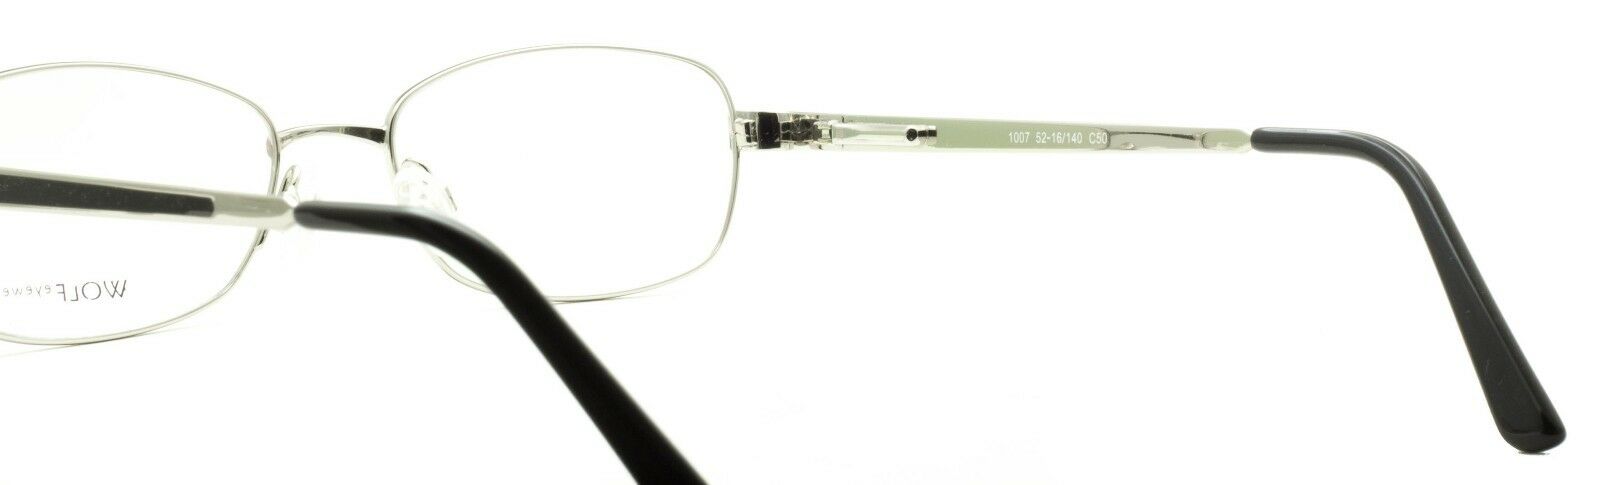 WOLF EYEWEAR 1007 C50 FRAMES RX Optical Glasses Eyeglasses Eyewear New - TRUSTED